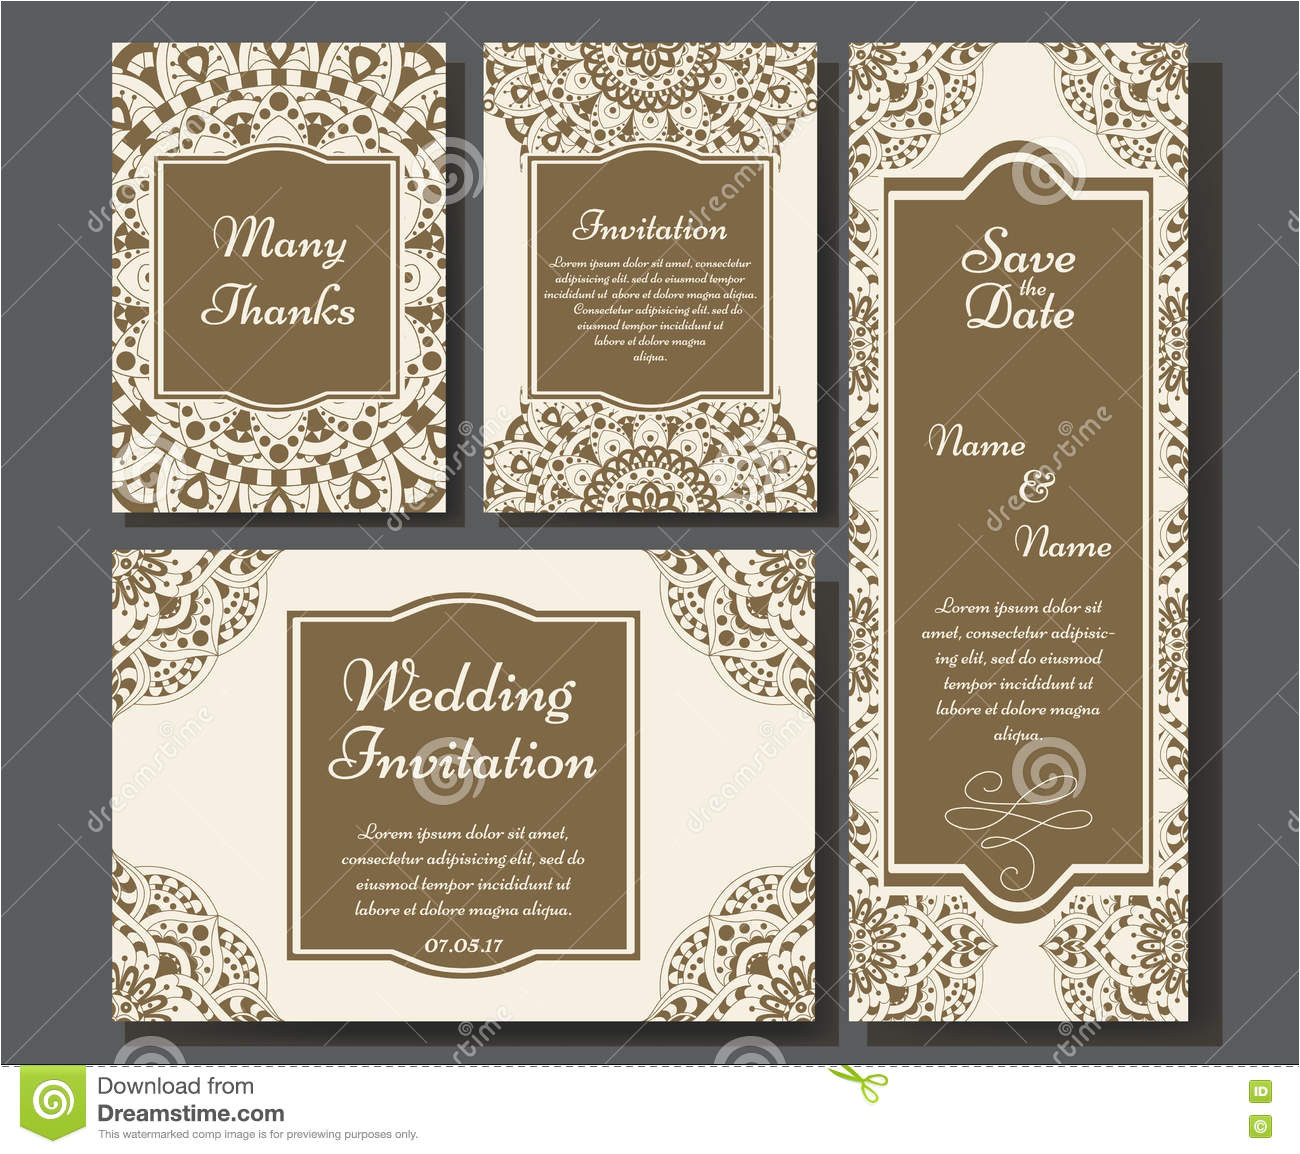 stock illustration wedding card collection mandala template invitation card decorative greeting invitaion design vintage islam arabic image81958940